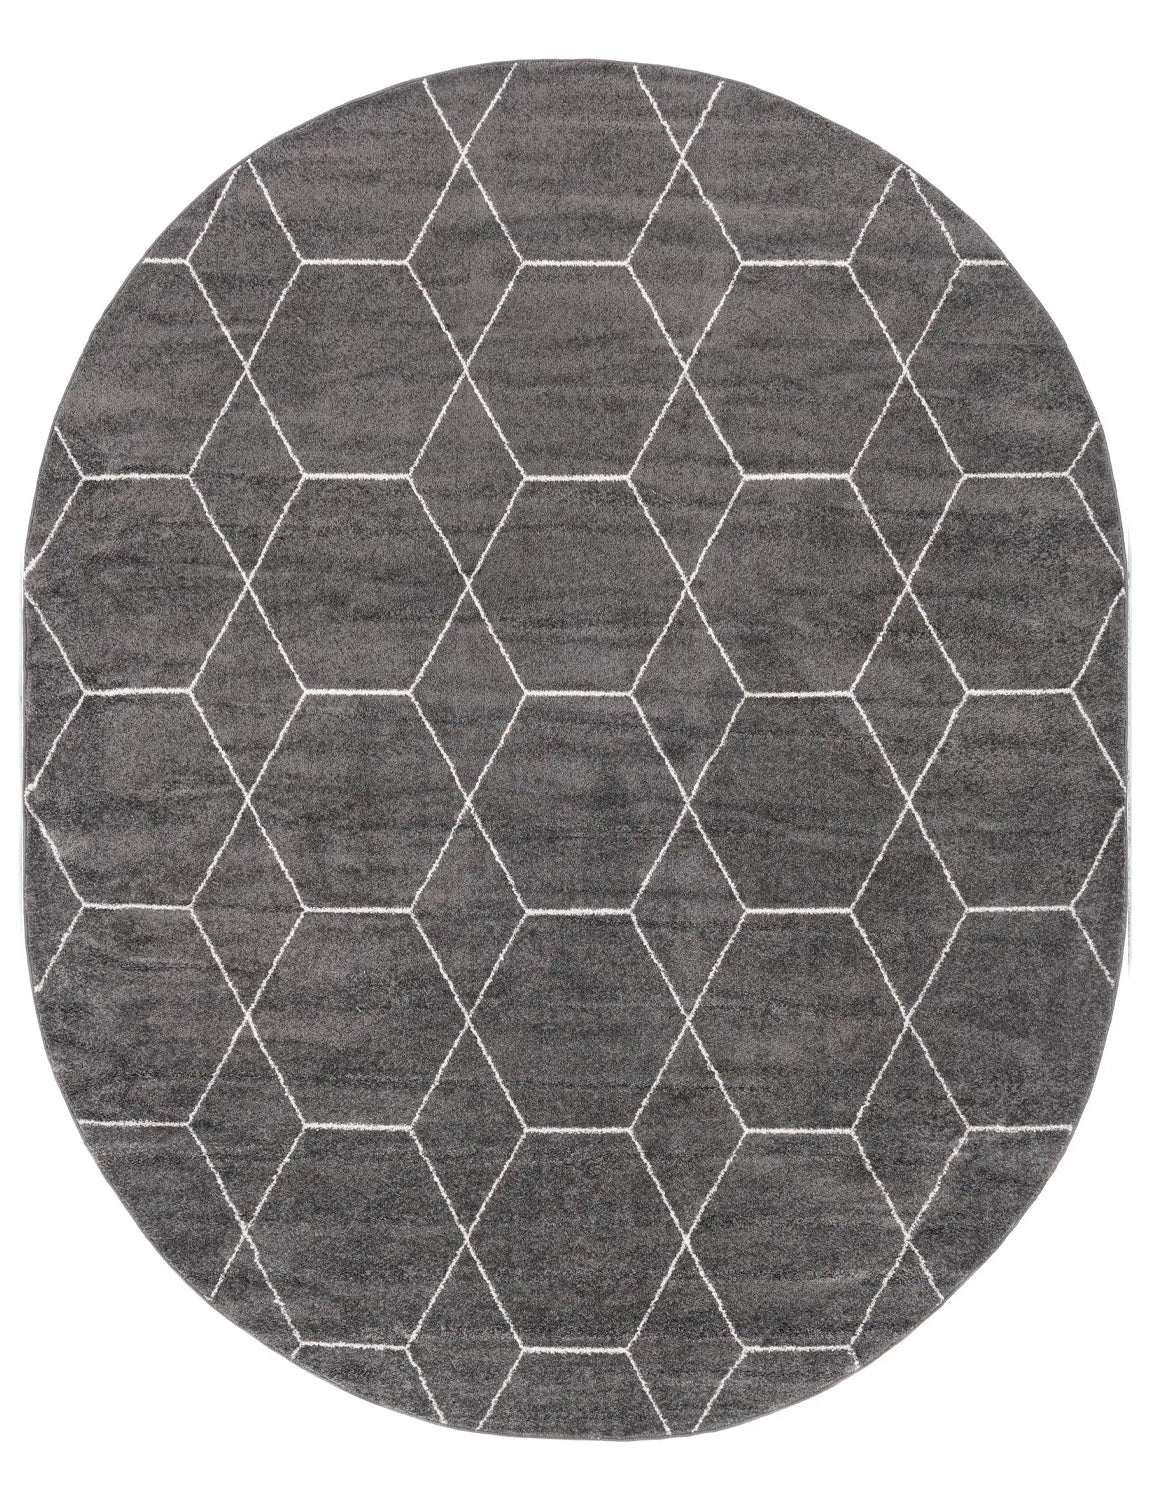 Gong Oval Rug, dark grey